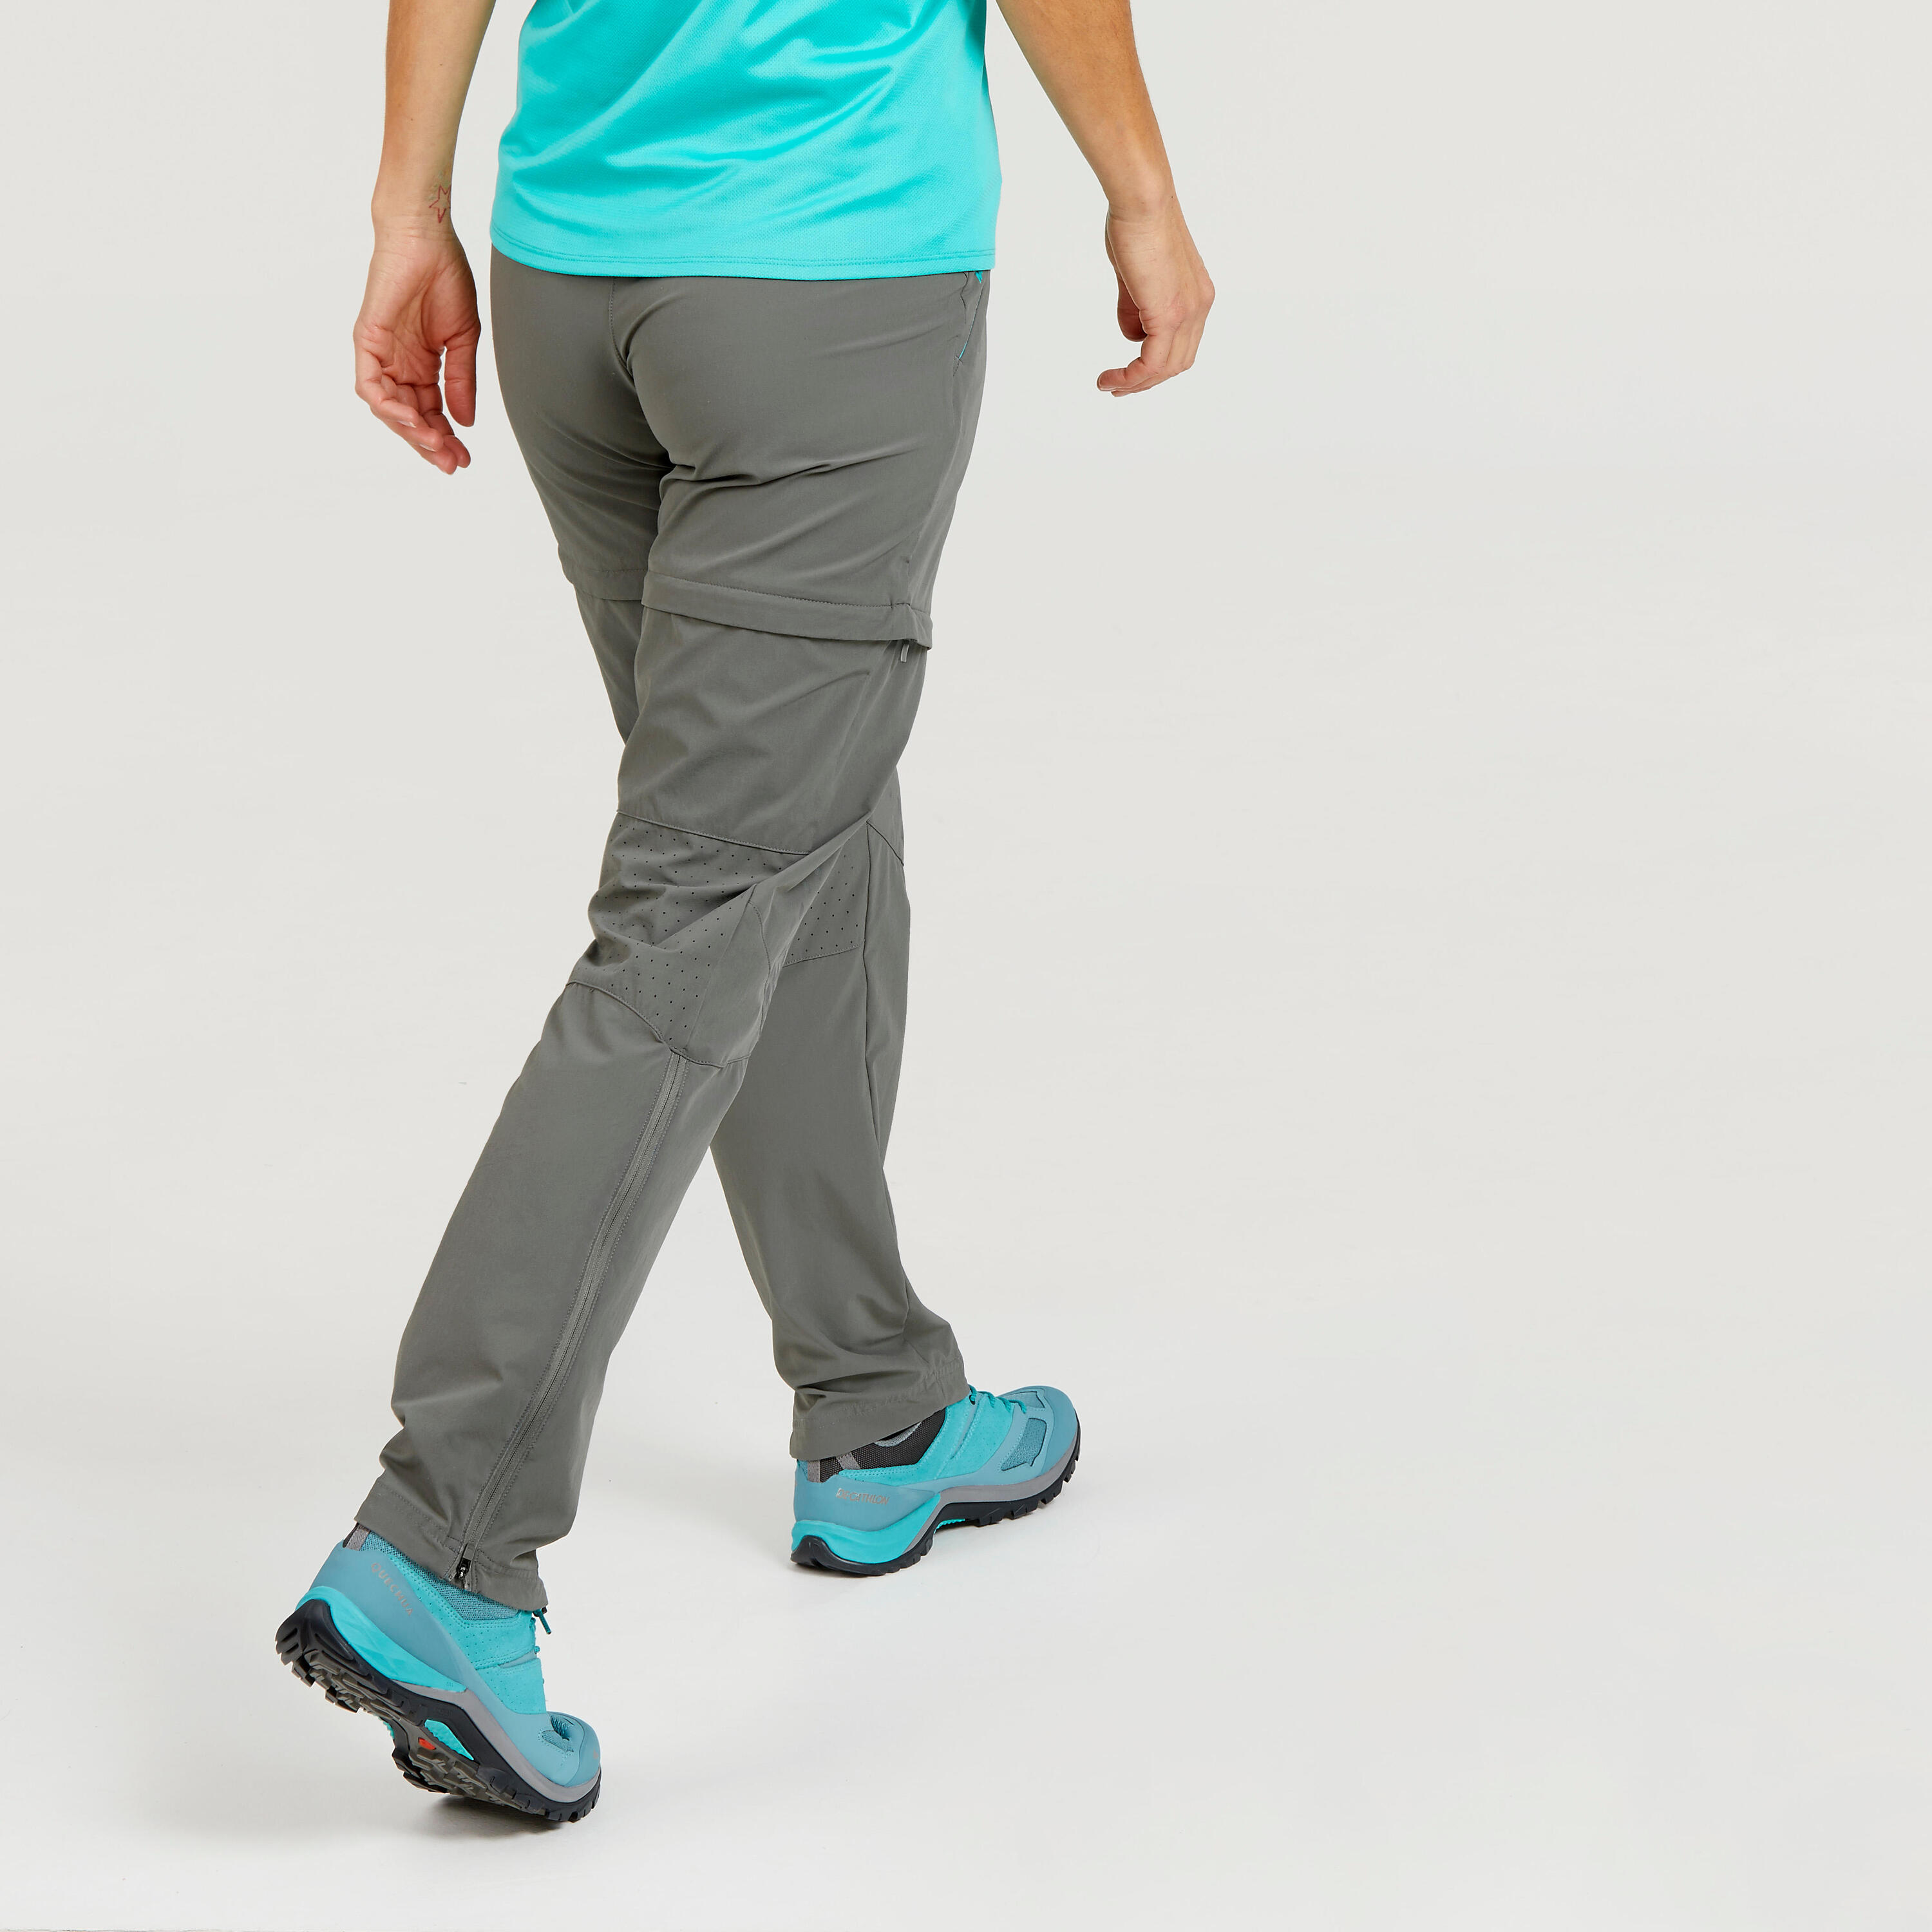 Women's convertible mountain hiking trousers - MH550 7/10